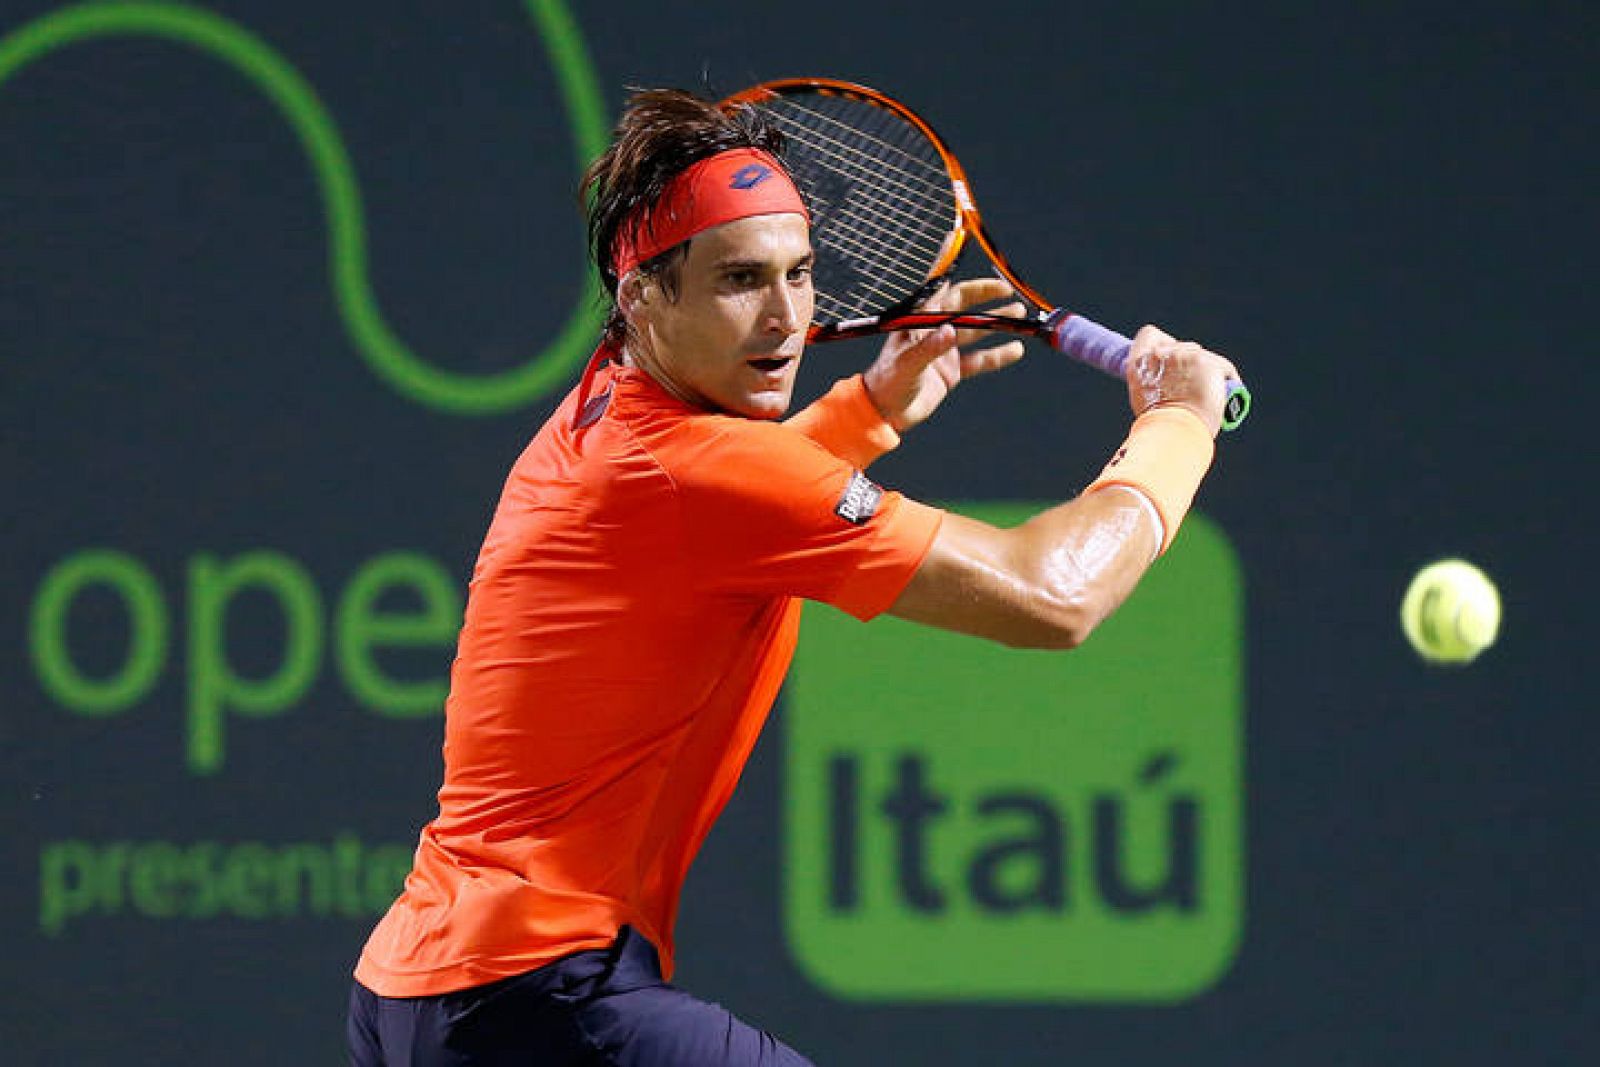 Miami Open-Djokovic v Ferrer